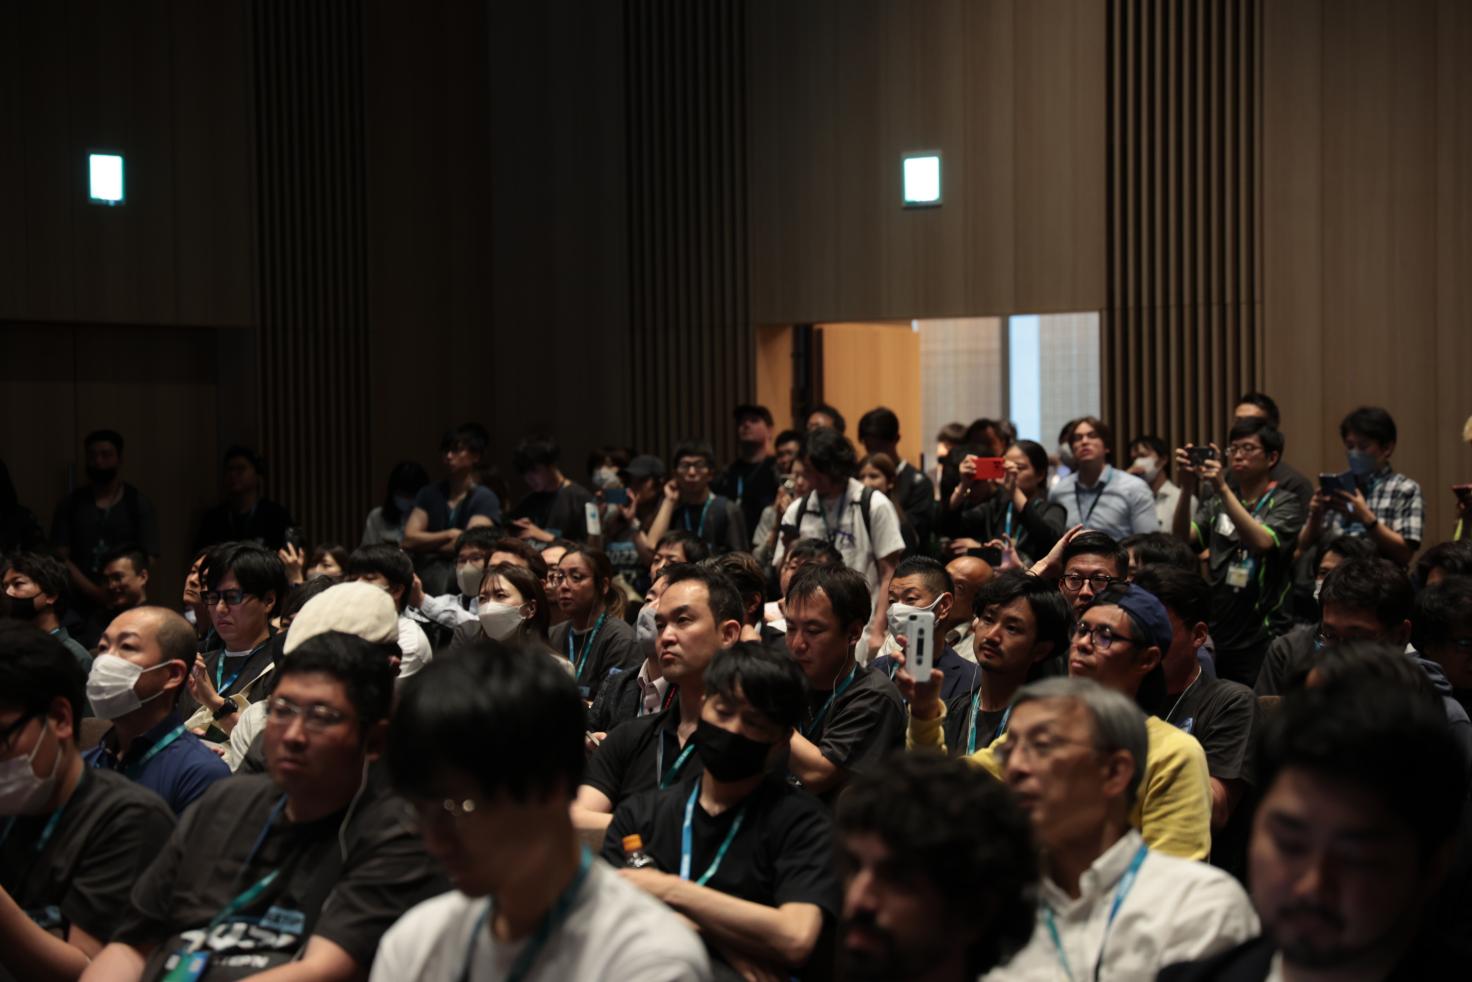 TEAMZ Web3 Summit于东京时间5月18日圆满闭幕，本次大会共计4500人参与